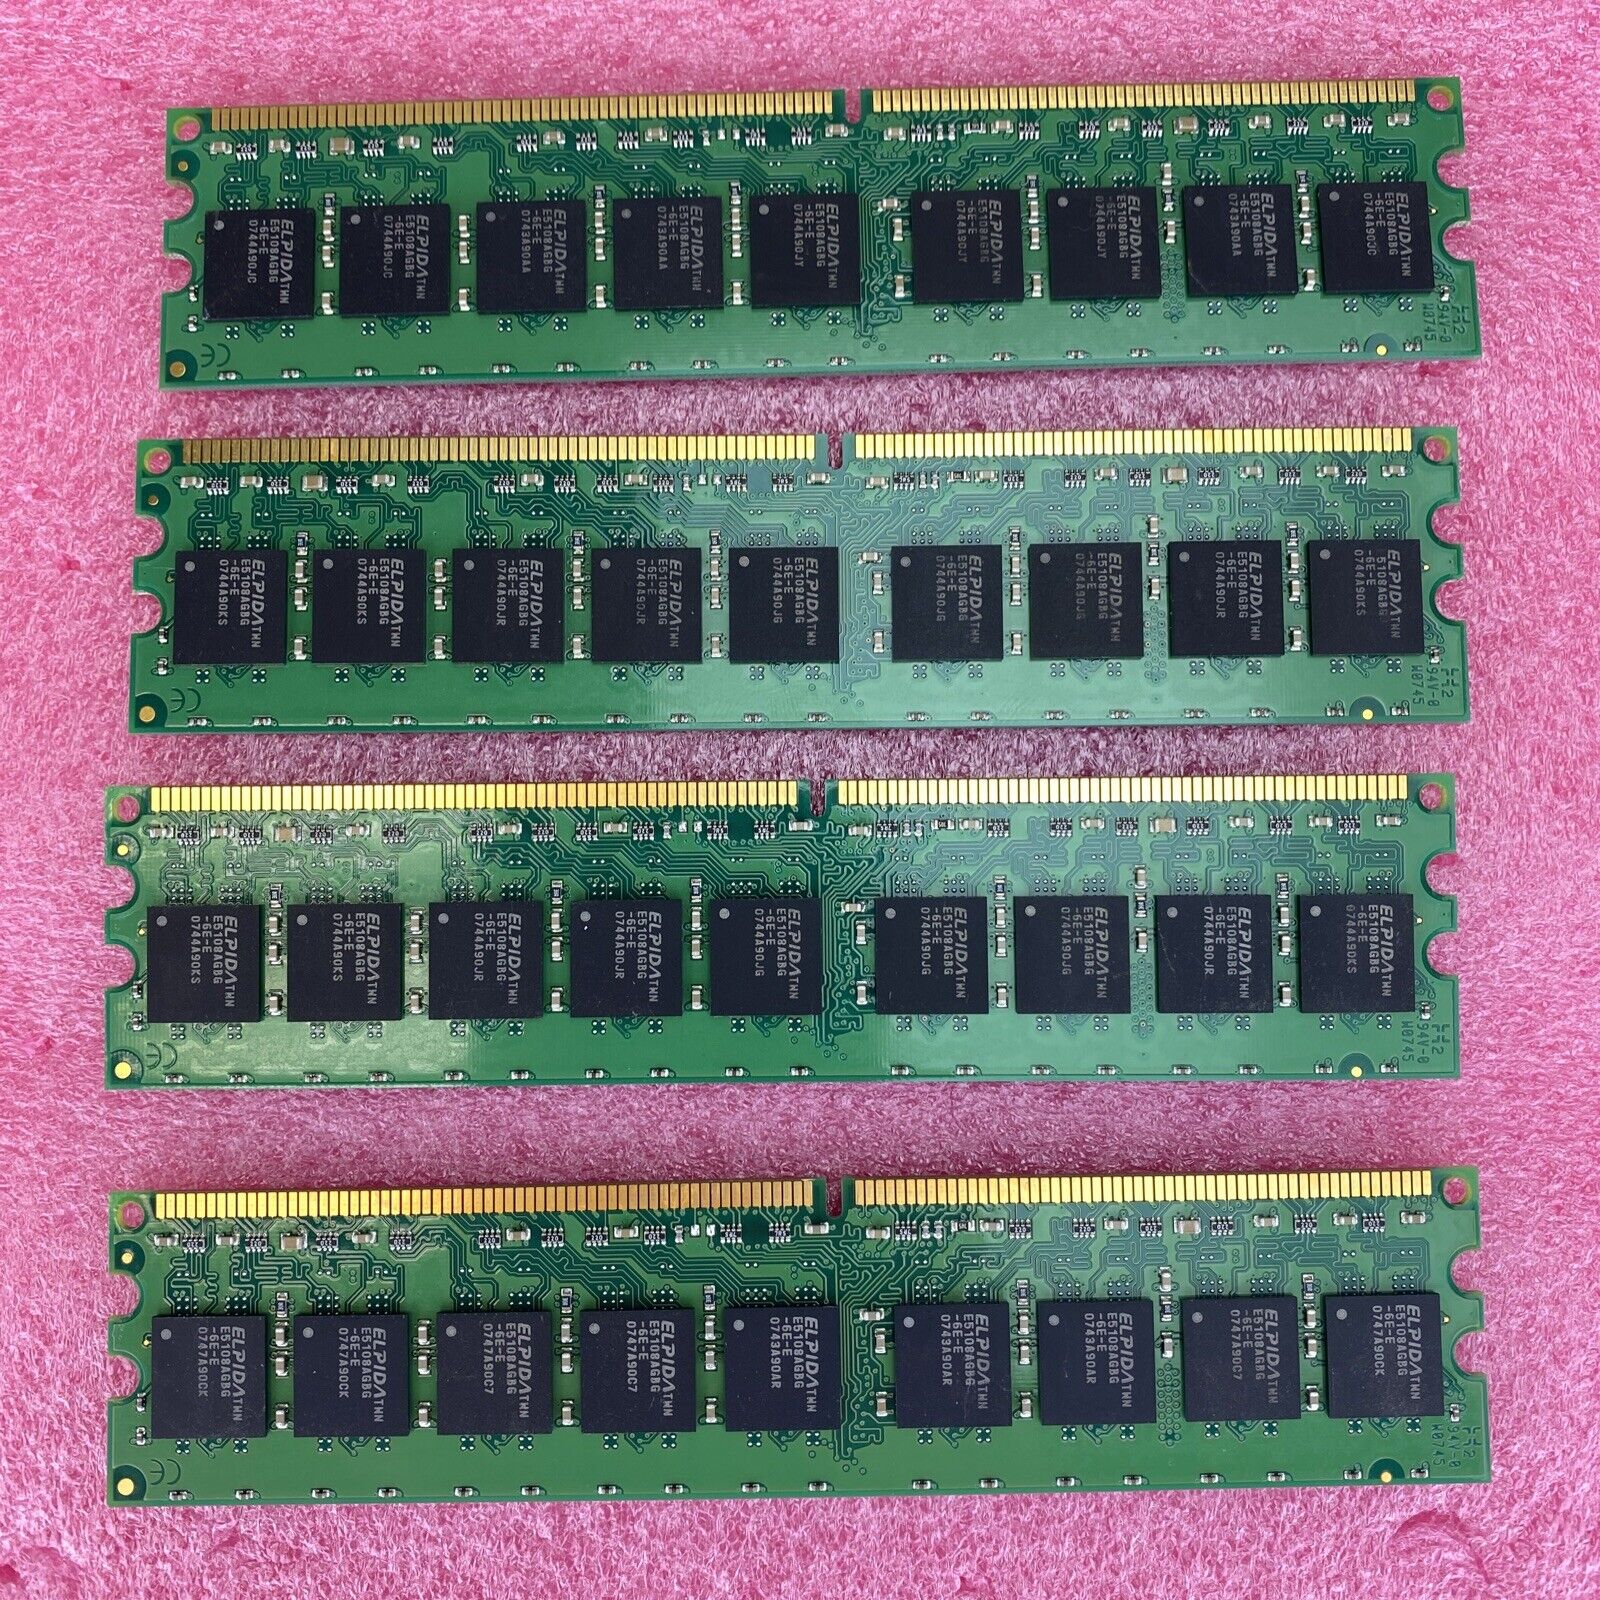 4x 1GB Kingston KD6502-ELG PC2-5300E DDR2 667 memory kit ECC RAM